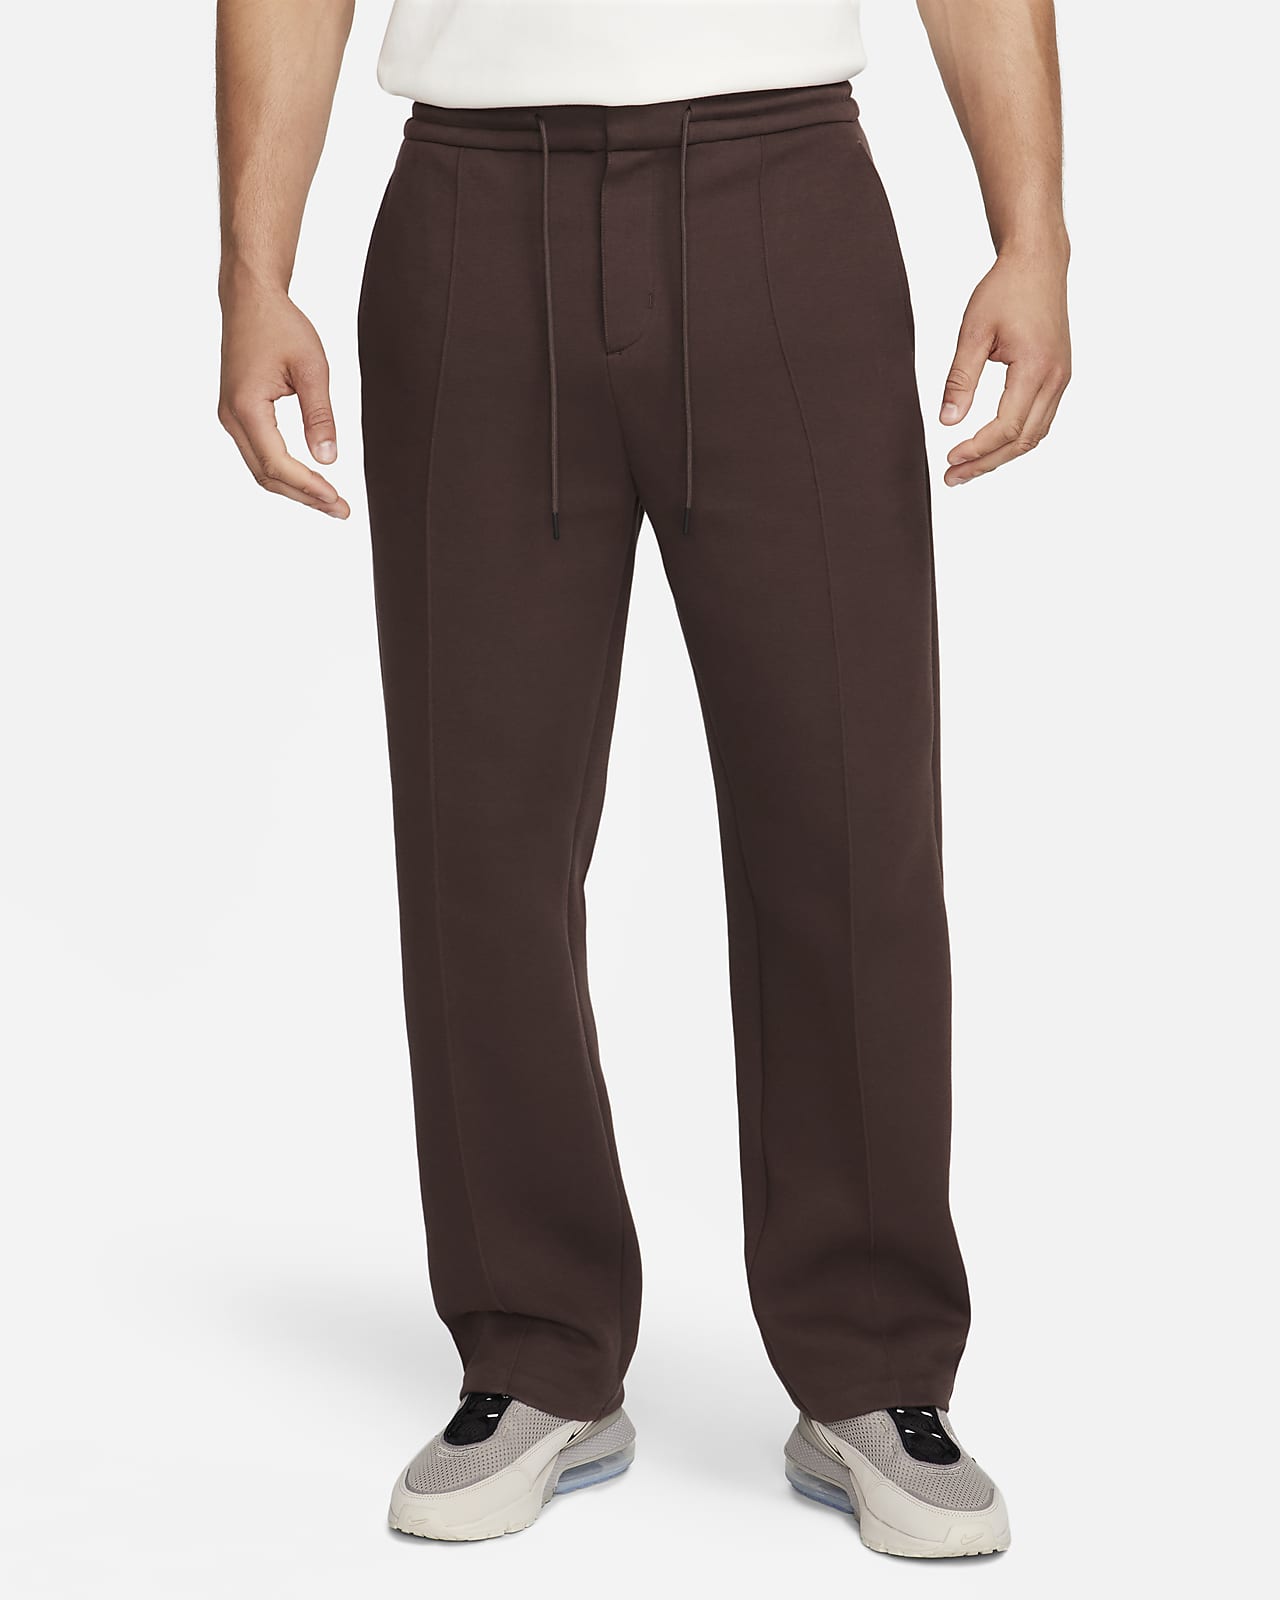 Nike Sportswear Tech Fleece Reimagined Pantalons de xandall d'ajust ample amb vora oberta - Home